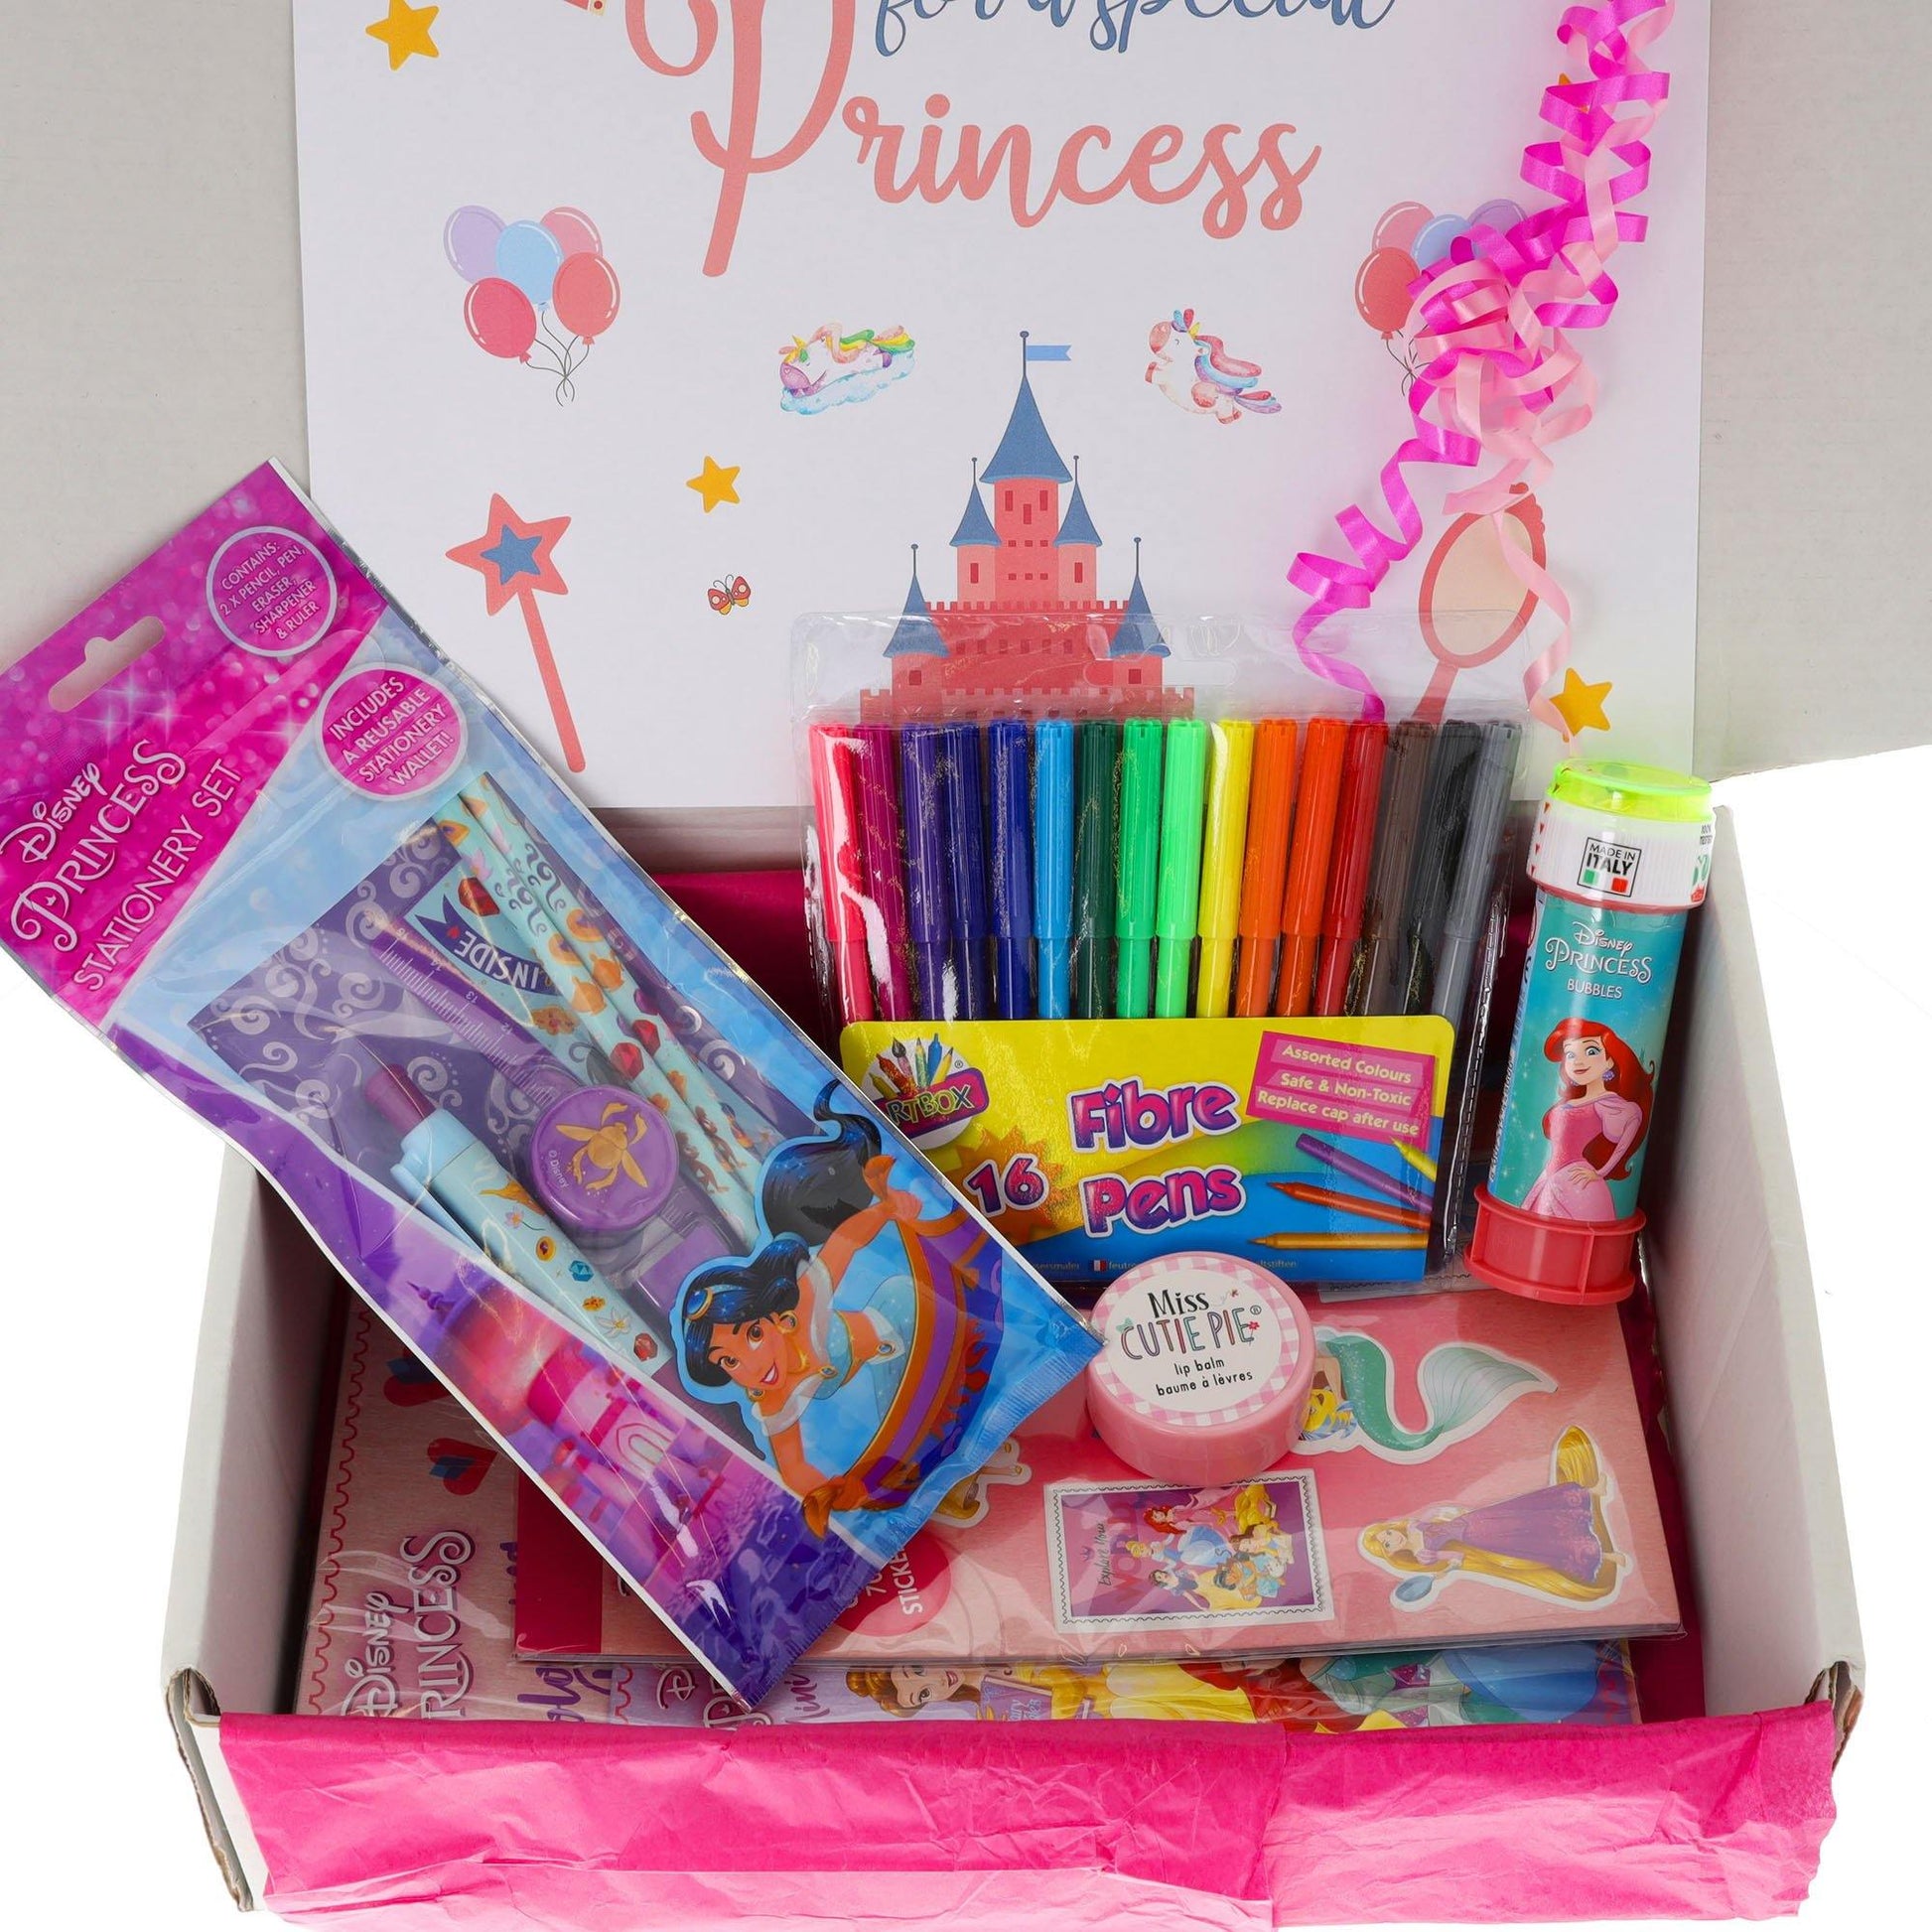 Princess Children's Activity & Bath Time Gift Box  - Always Looking Good - Medium Set  